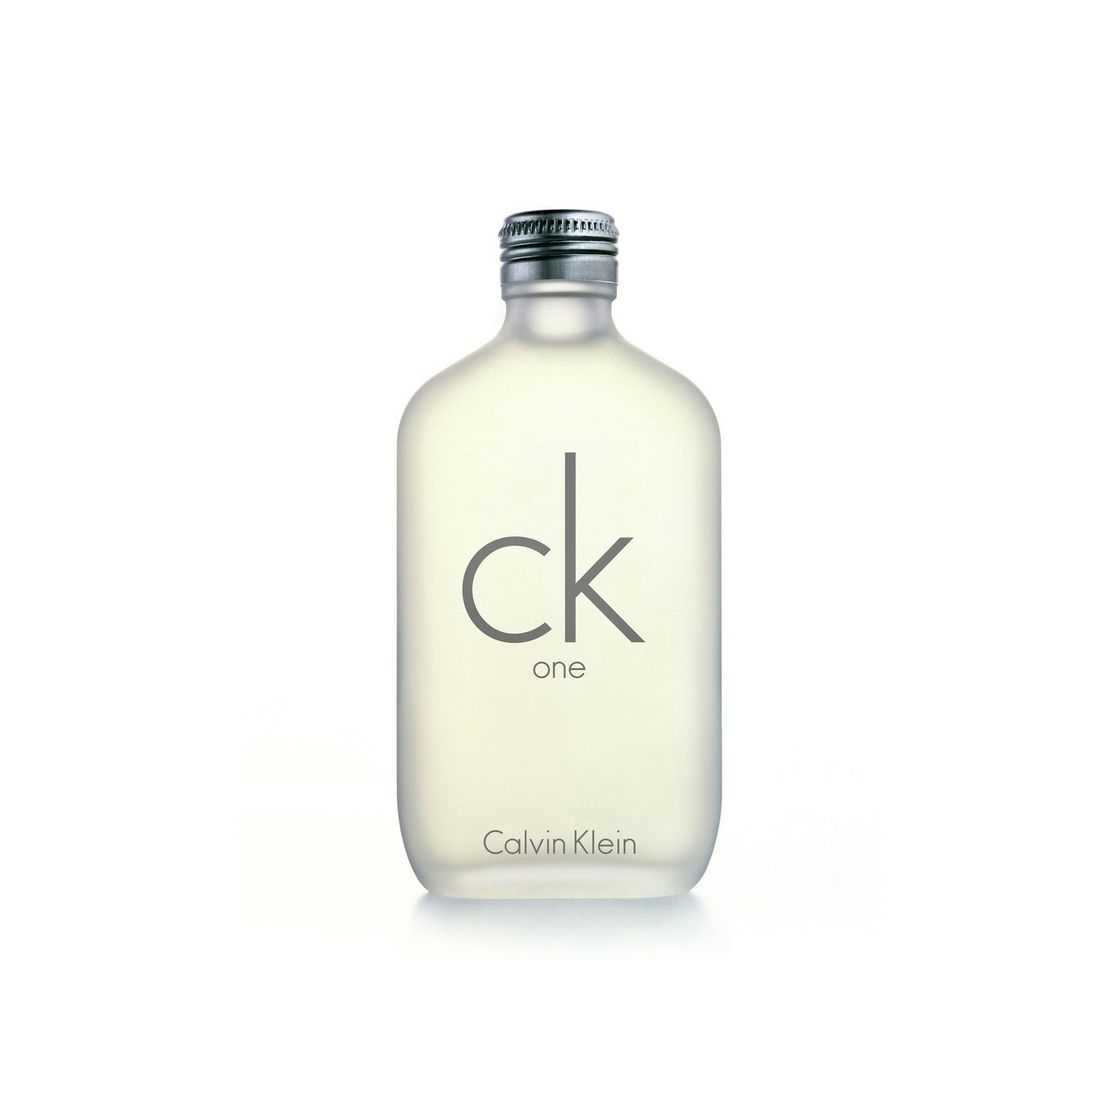 Perfume CK ONE